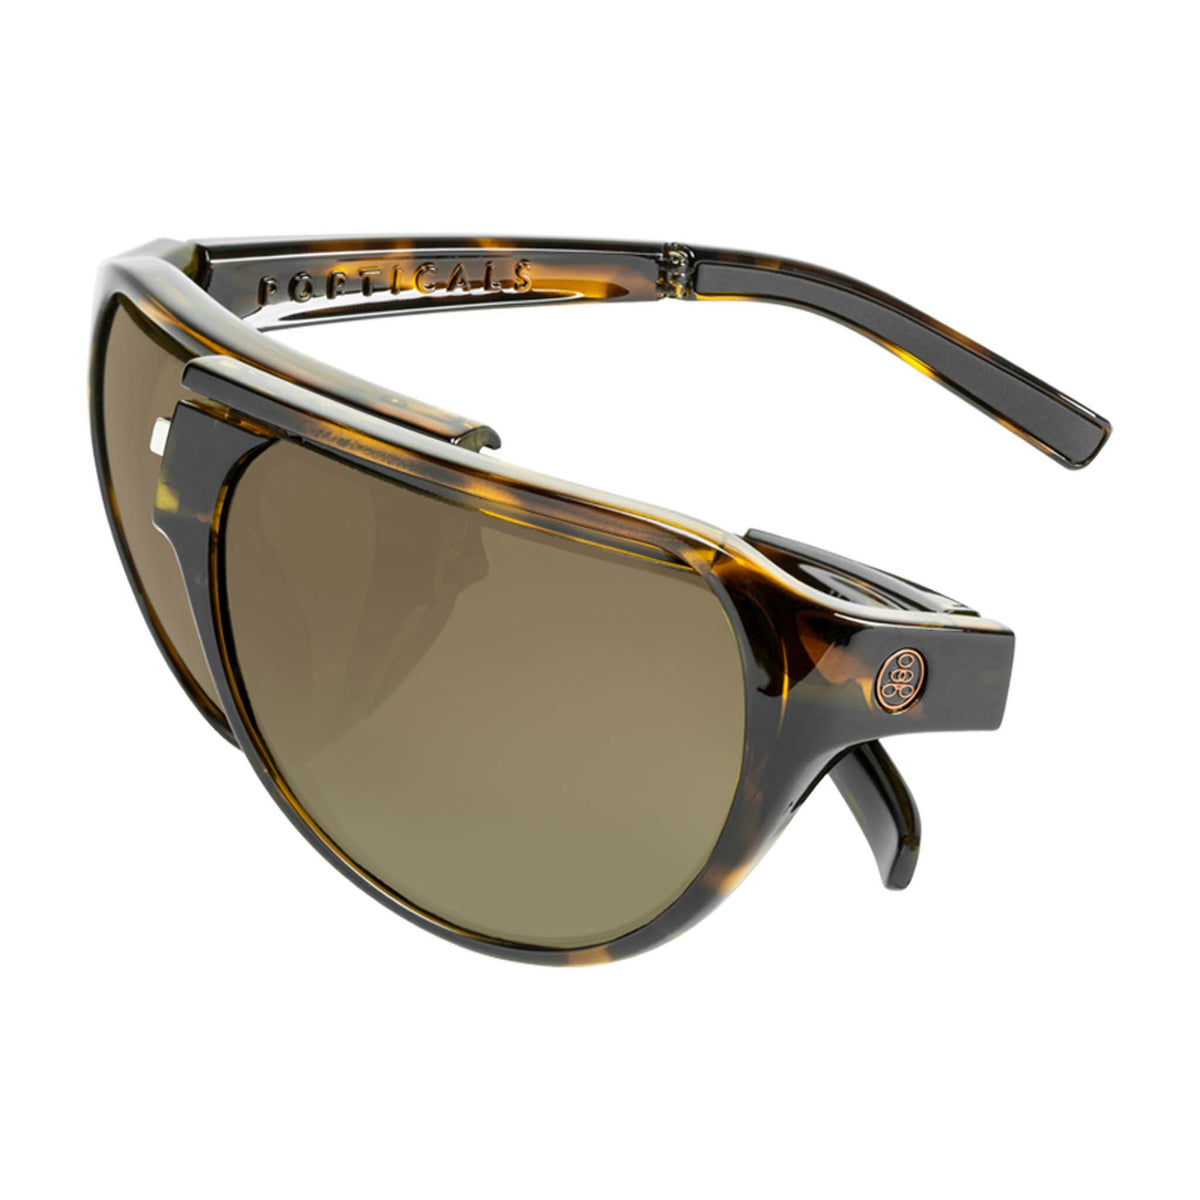 Popticals, Premium Compact Sunglasses, PopAir, 300010-CTNC, Polarized Sunglasses, Gloss Tortoise Frame, Gradient Brown Lenses, Spider View